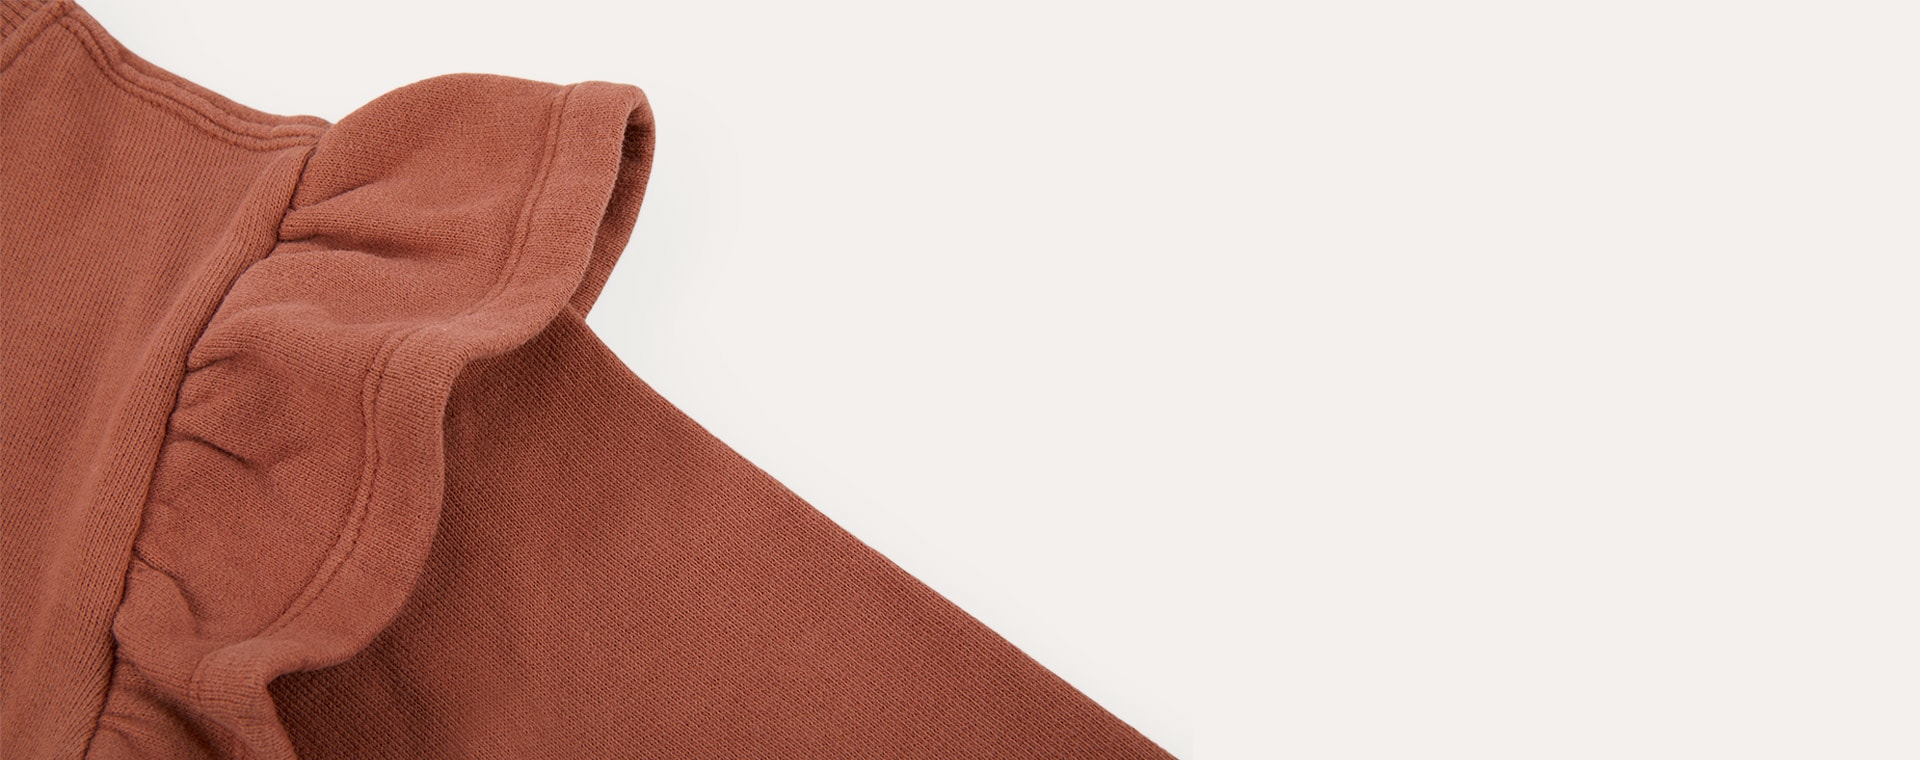 Copper KIDLY Label Sweatshirt Frill Dress